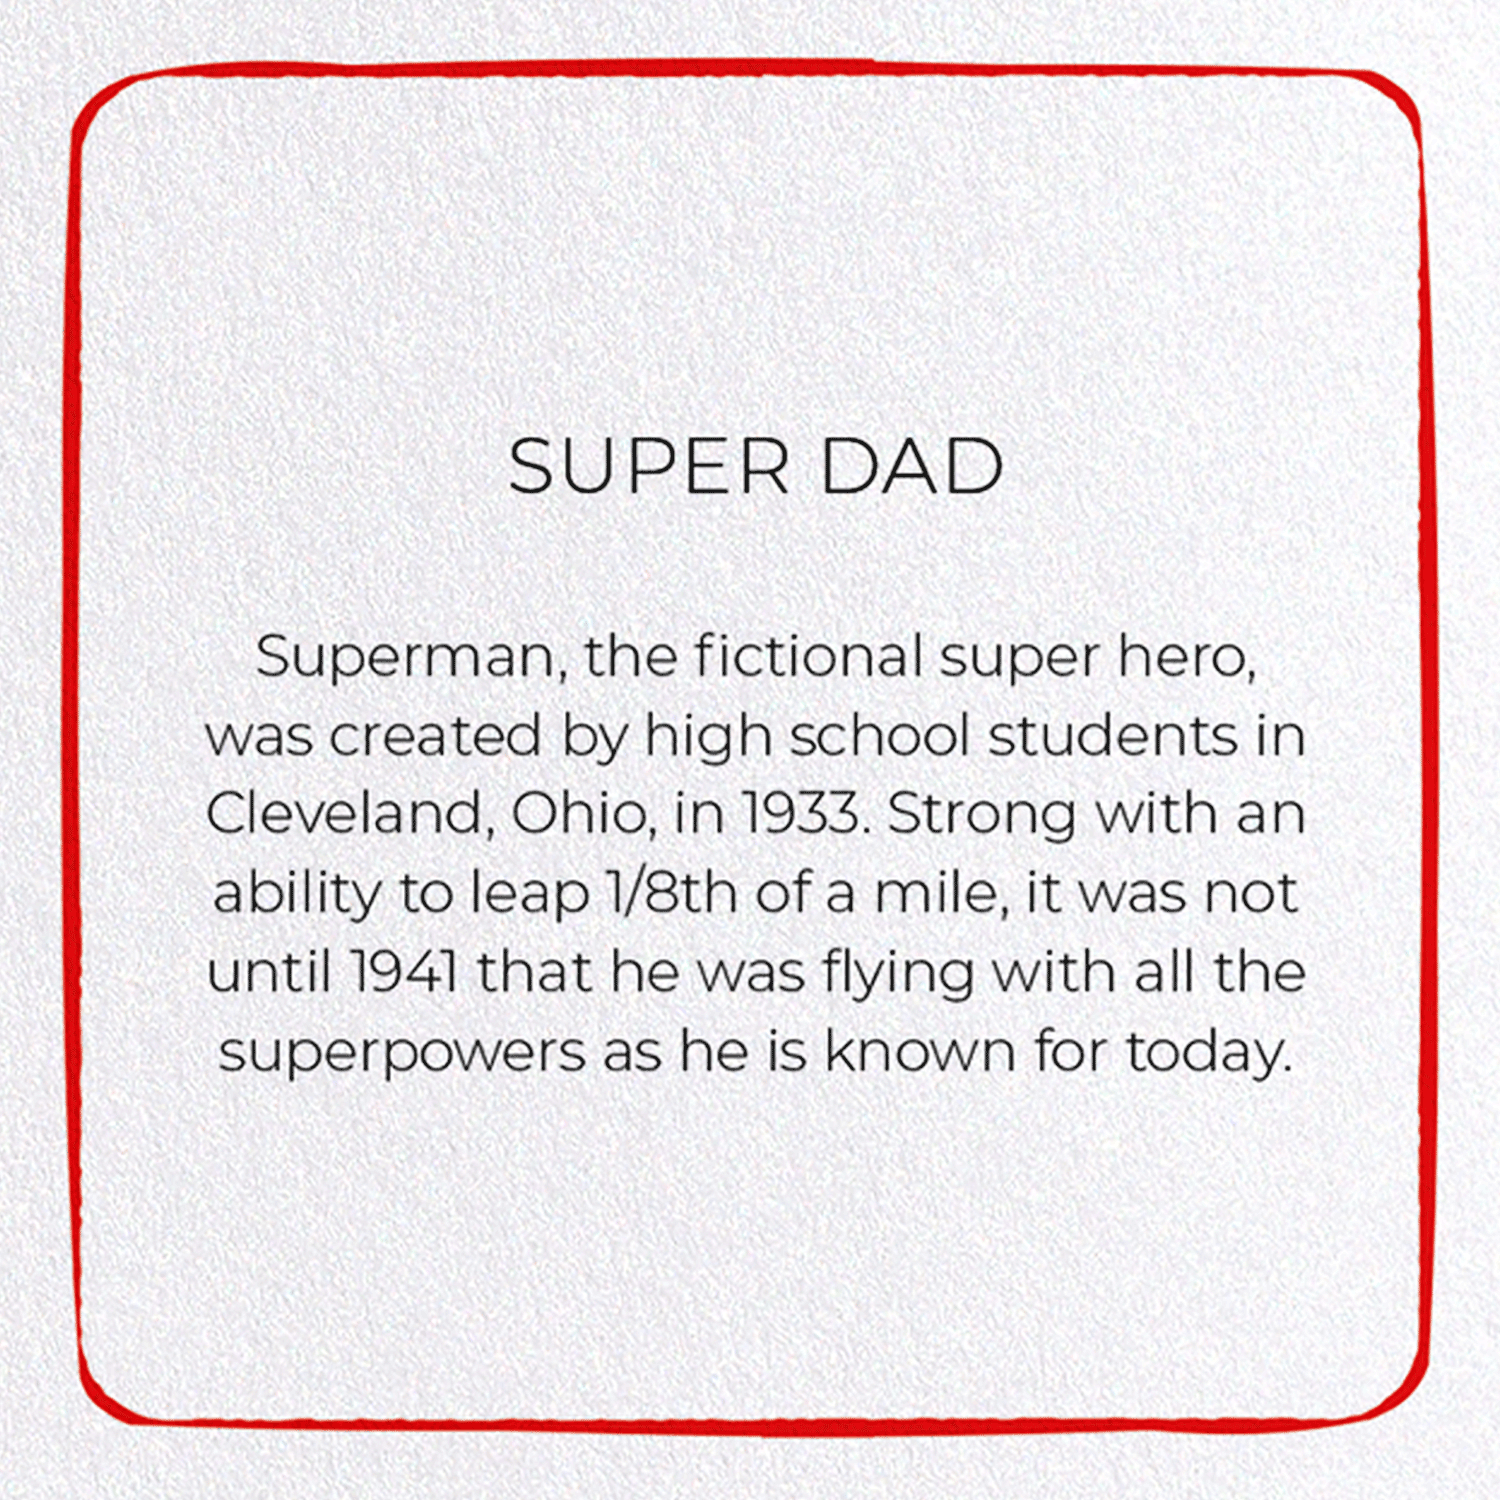 SUPER DAD: Colourblock Greeting Card